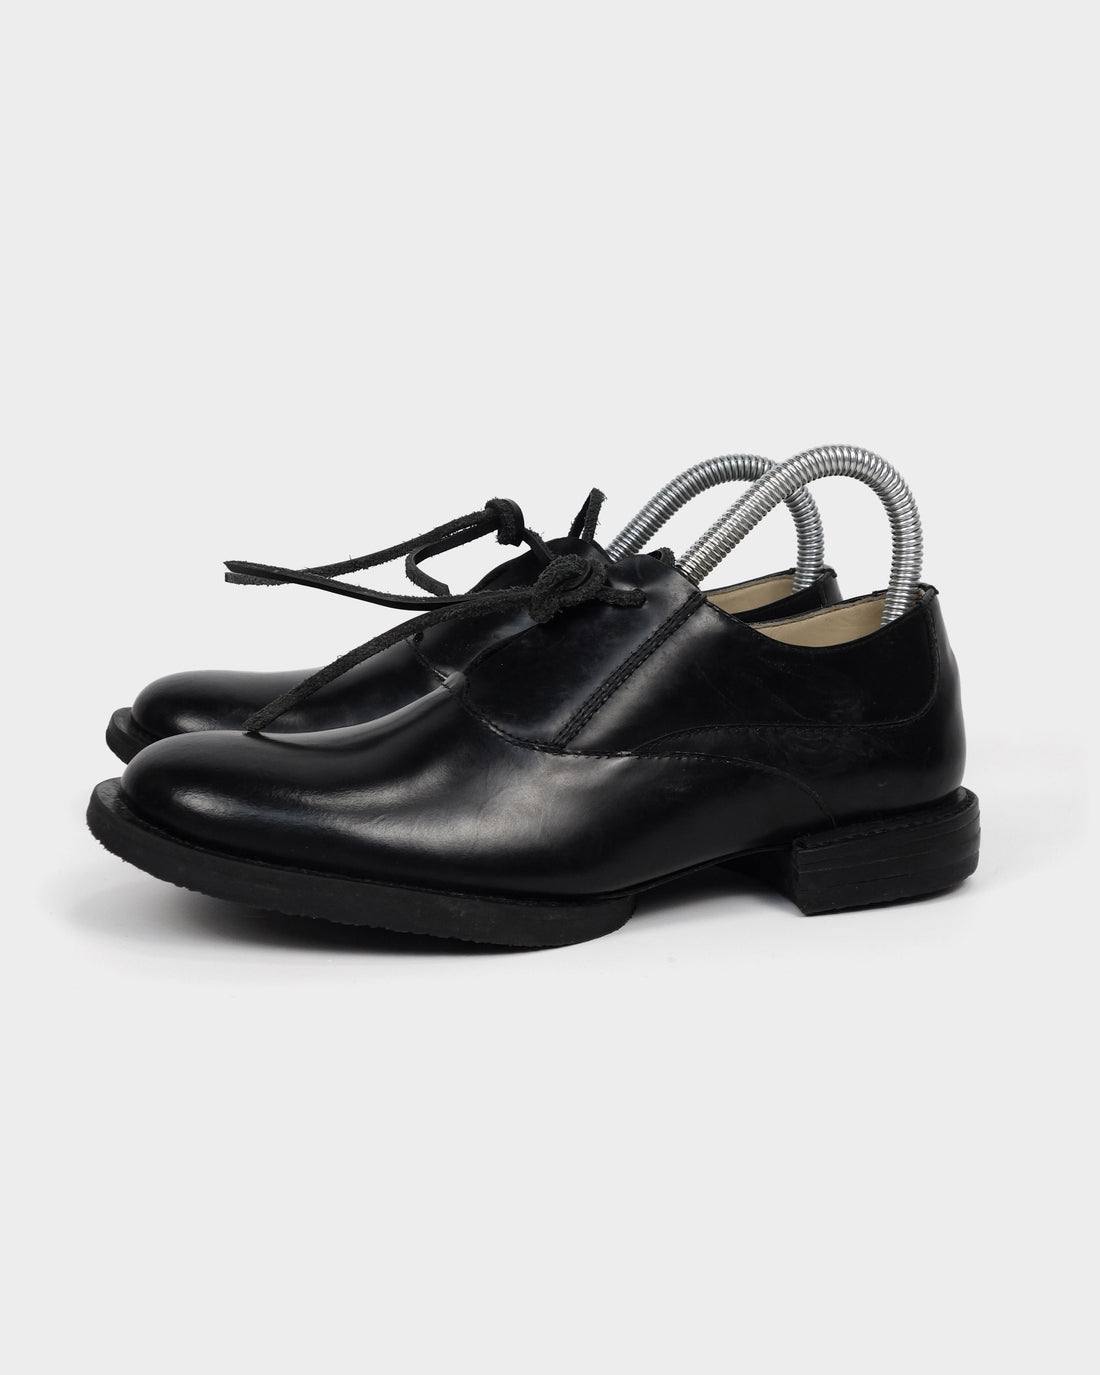 Marithé Francois Girbaud Black Leather Shoes 1990's